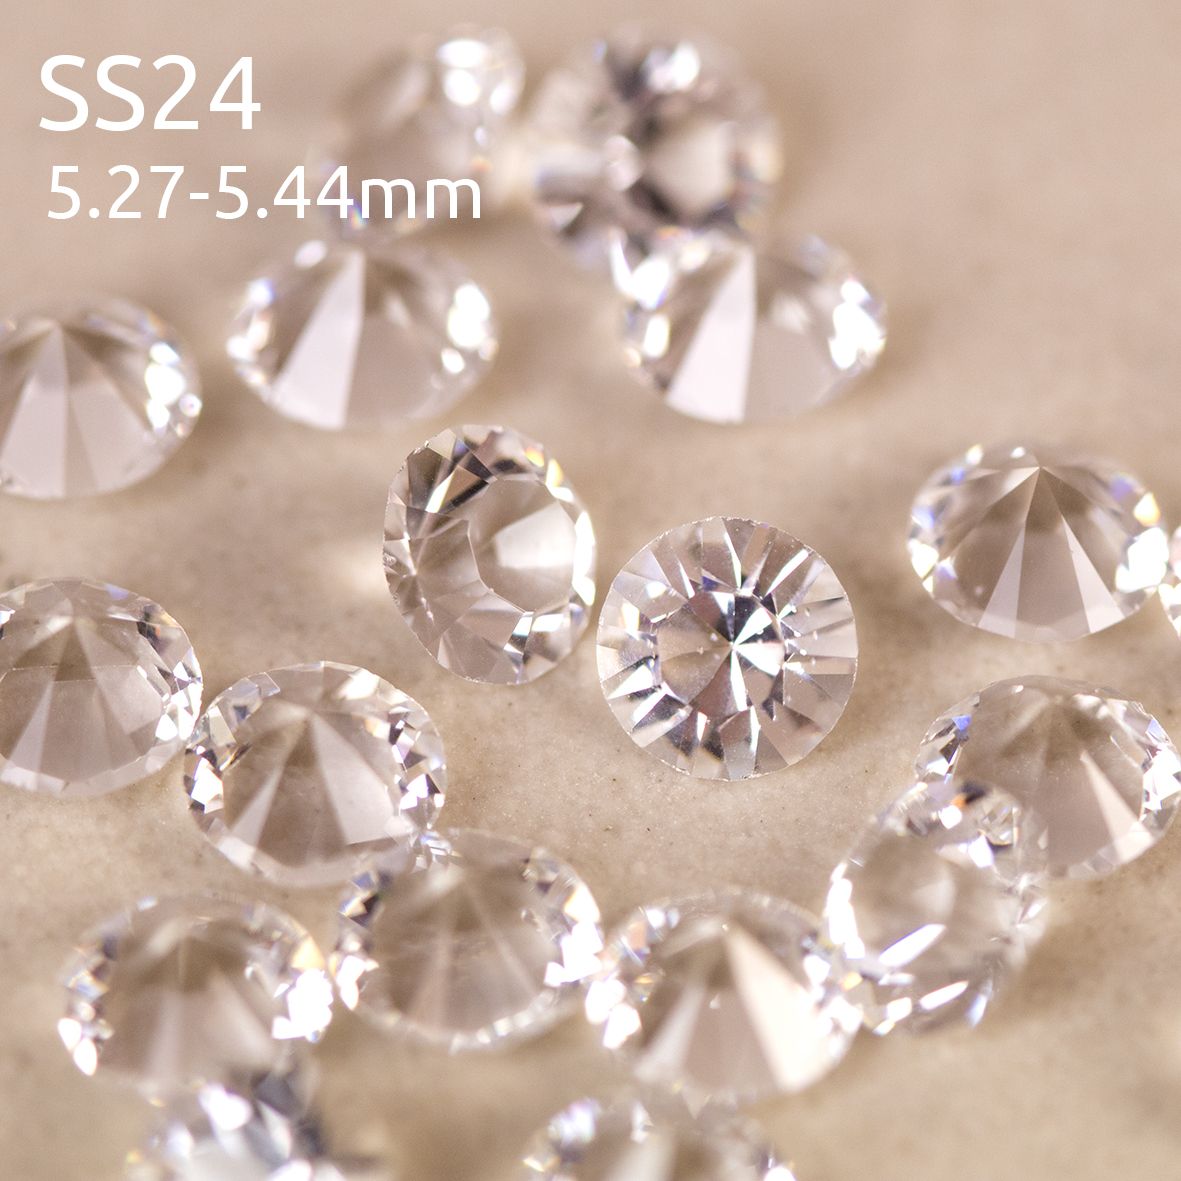 Swarovski ® Pointed Back Crystals - MEDIUM category image